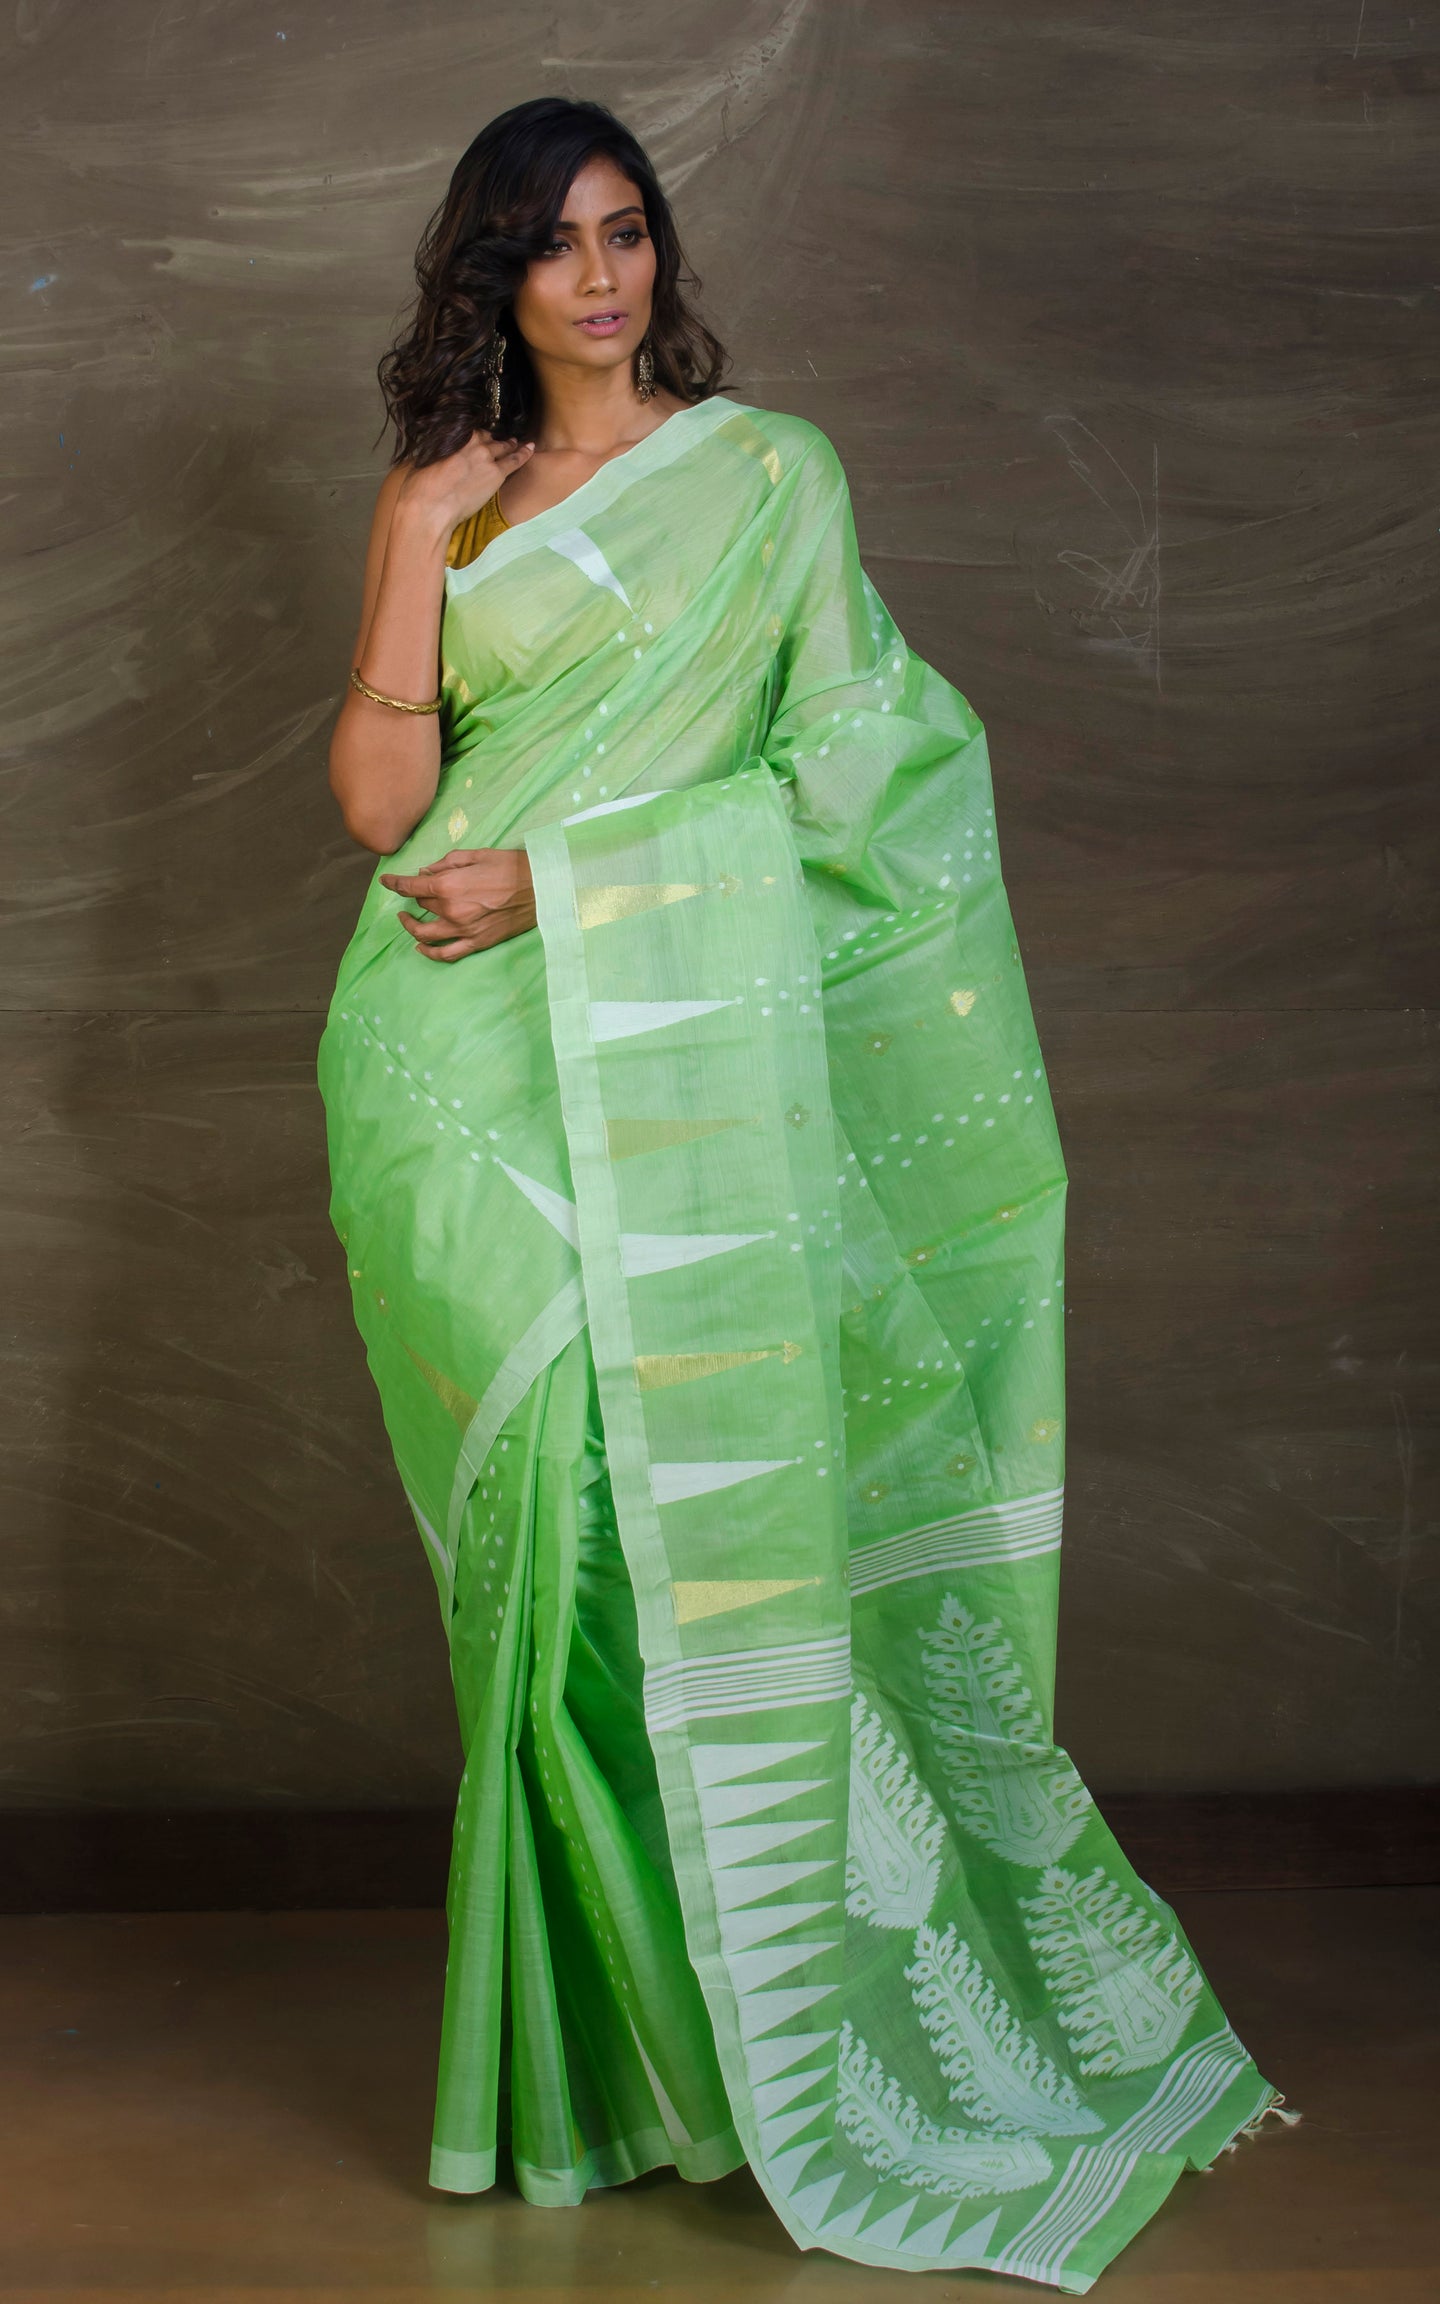 Handloom Tussar Silk Jamdani Saree in Parakeet Green, White and Gold - Bengal Looms India